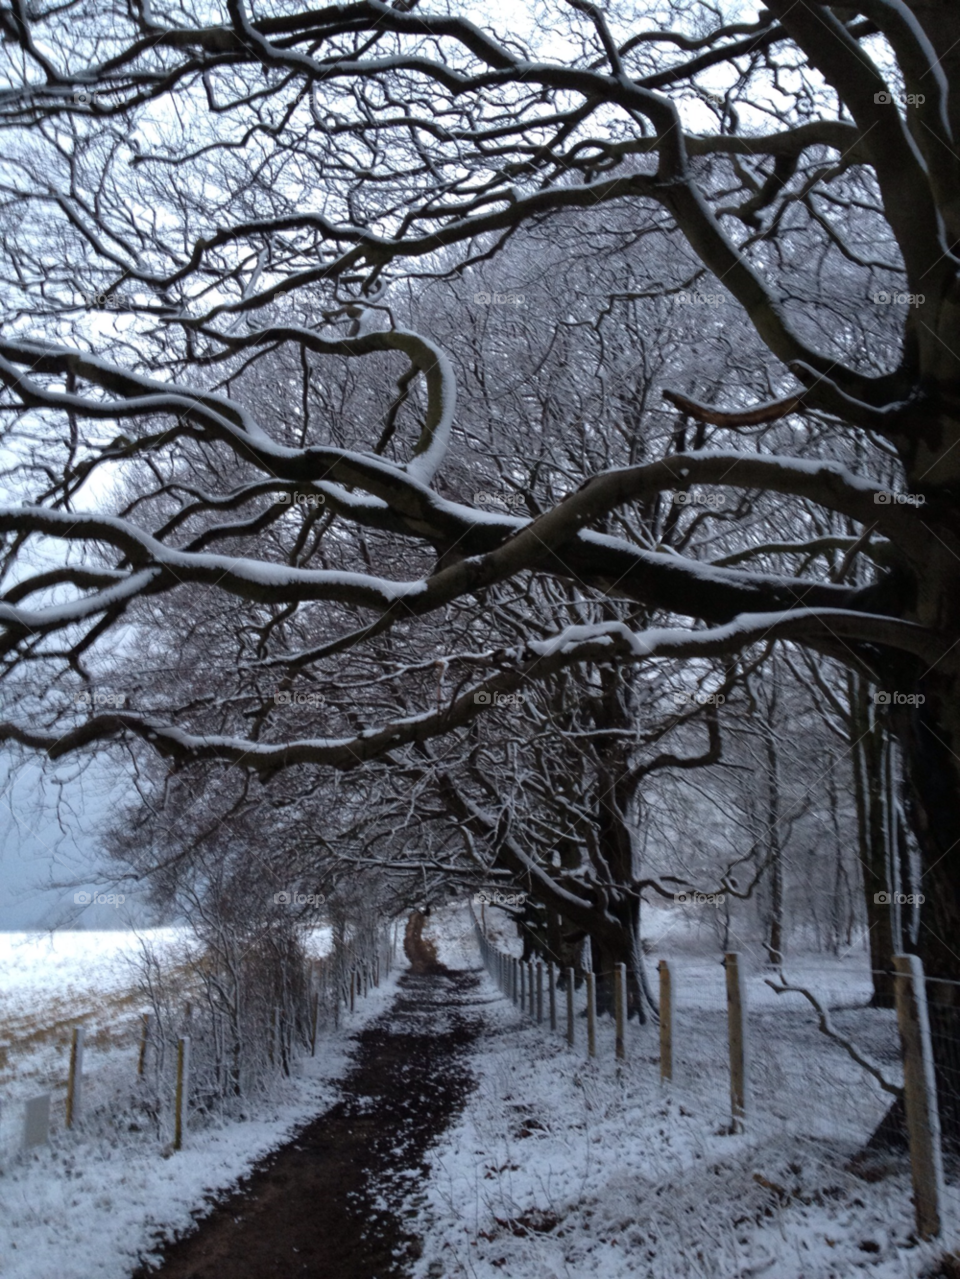 snow scene road to cleeve common cheltenham glos uk by zippypitt